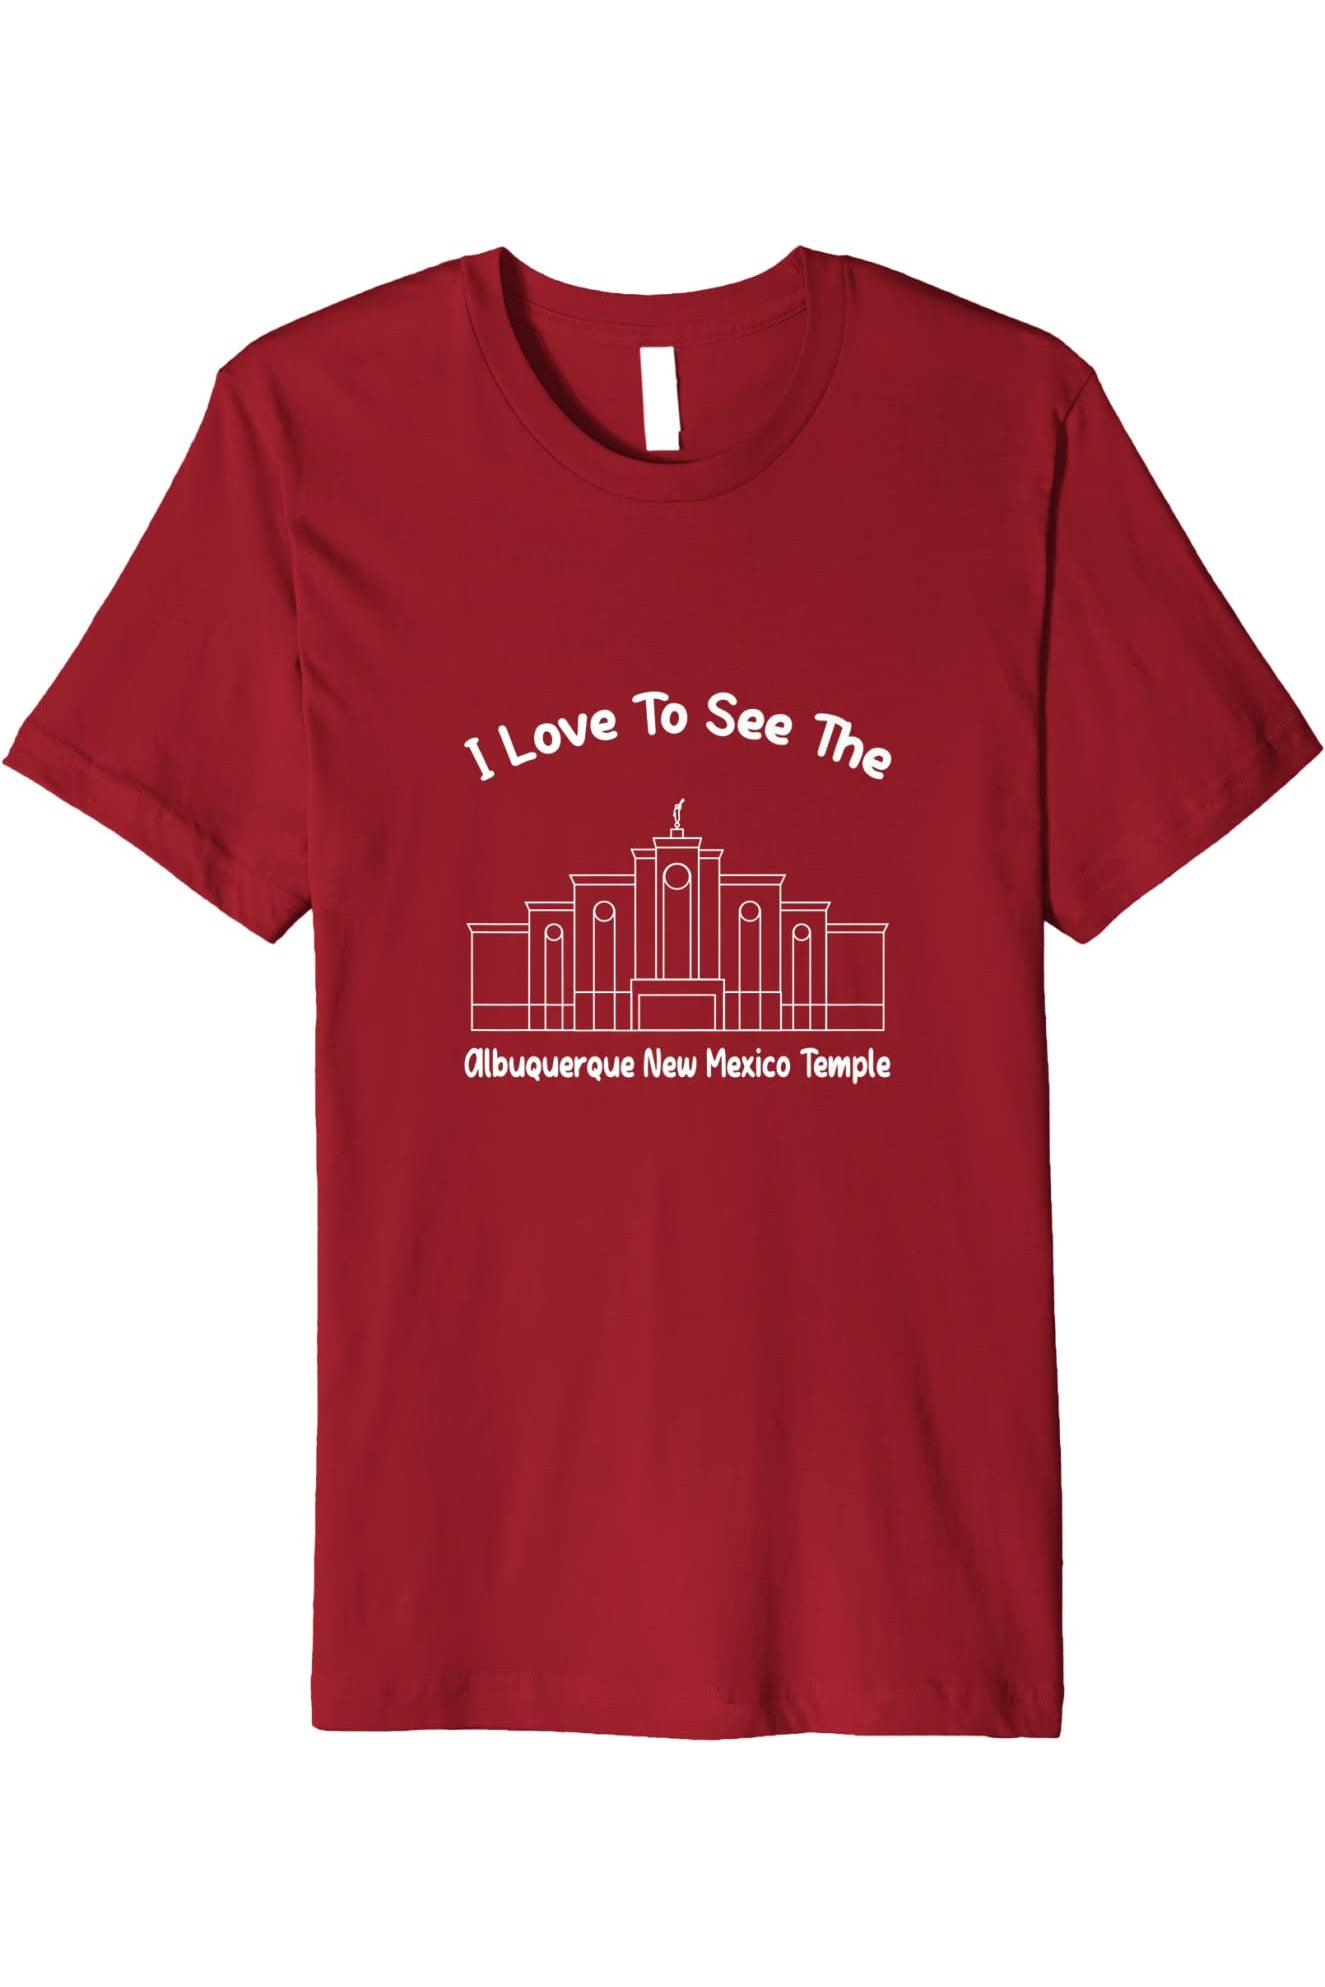 Albuquerque New Mexico Temple T-Shirt - Premium - Primary Style (English) US